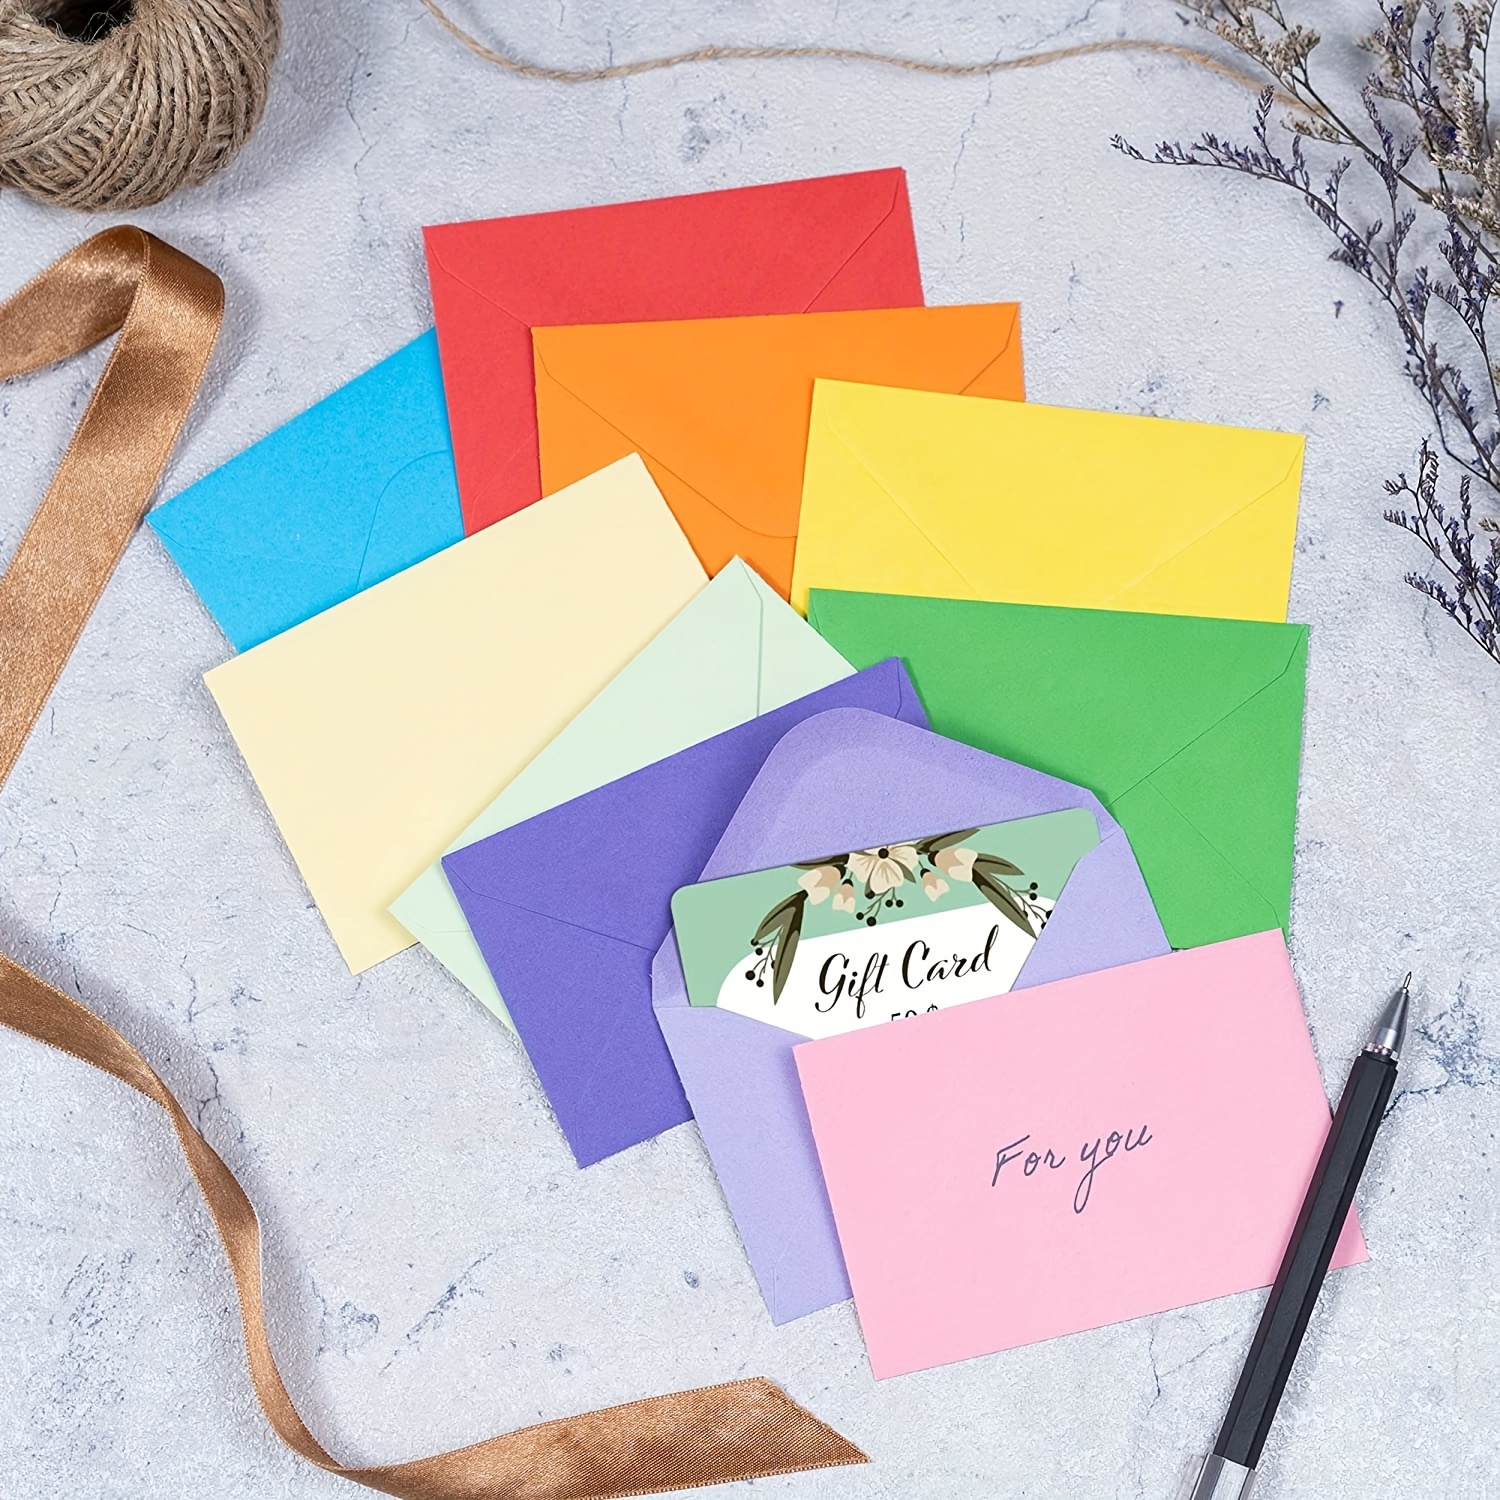 100 Count Assorted Color Gift Card Envelopes, Small Envelope Gummed Seal, Mini Cash Envelopes for Business Cards, Saving Money, 10 Colors, 4 x 2.7 in